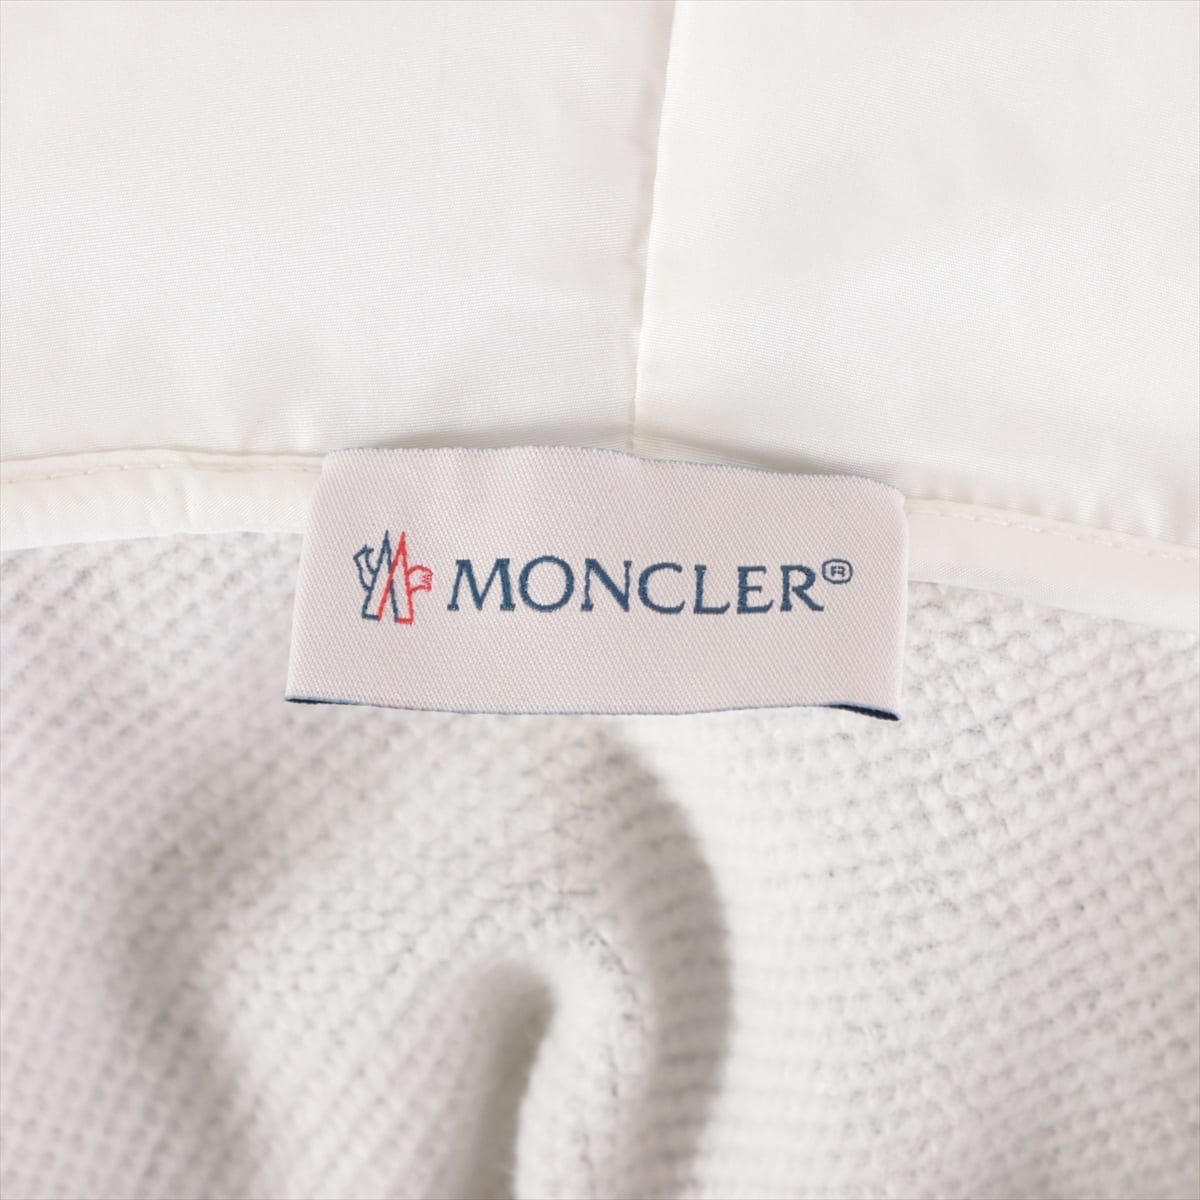 Moncler ABITO 20 years Cotton & nylon Dress M Ladies' Grey